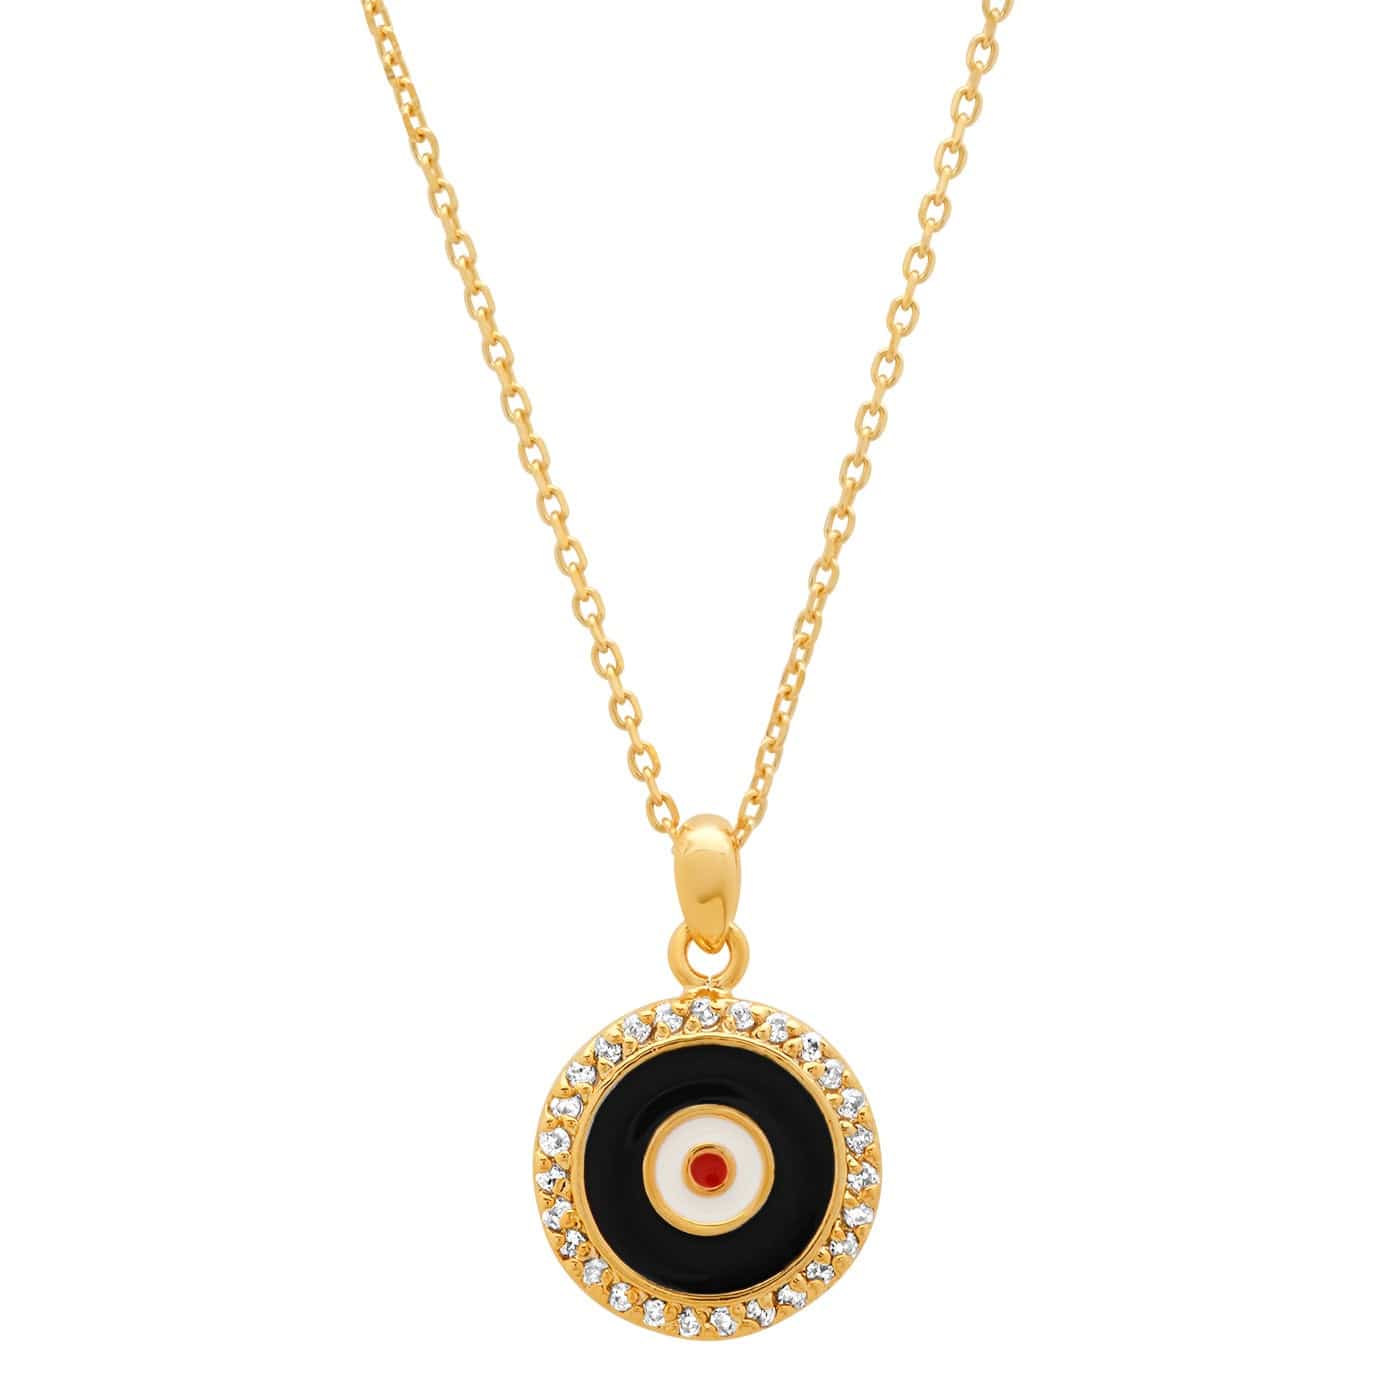 TAI JEWELRY Necklace Black/Ivory Enamel Medium Round Eye Pendant